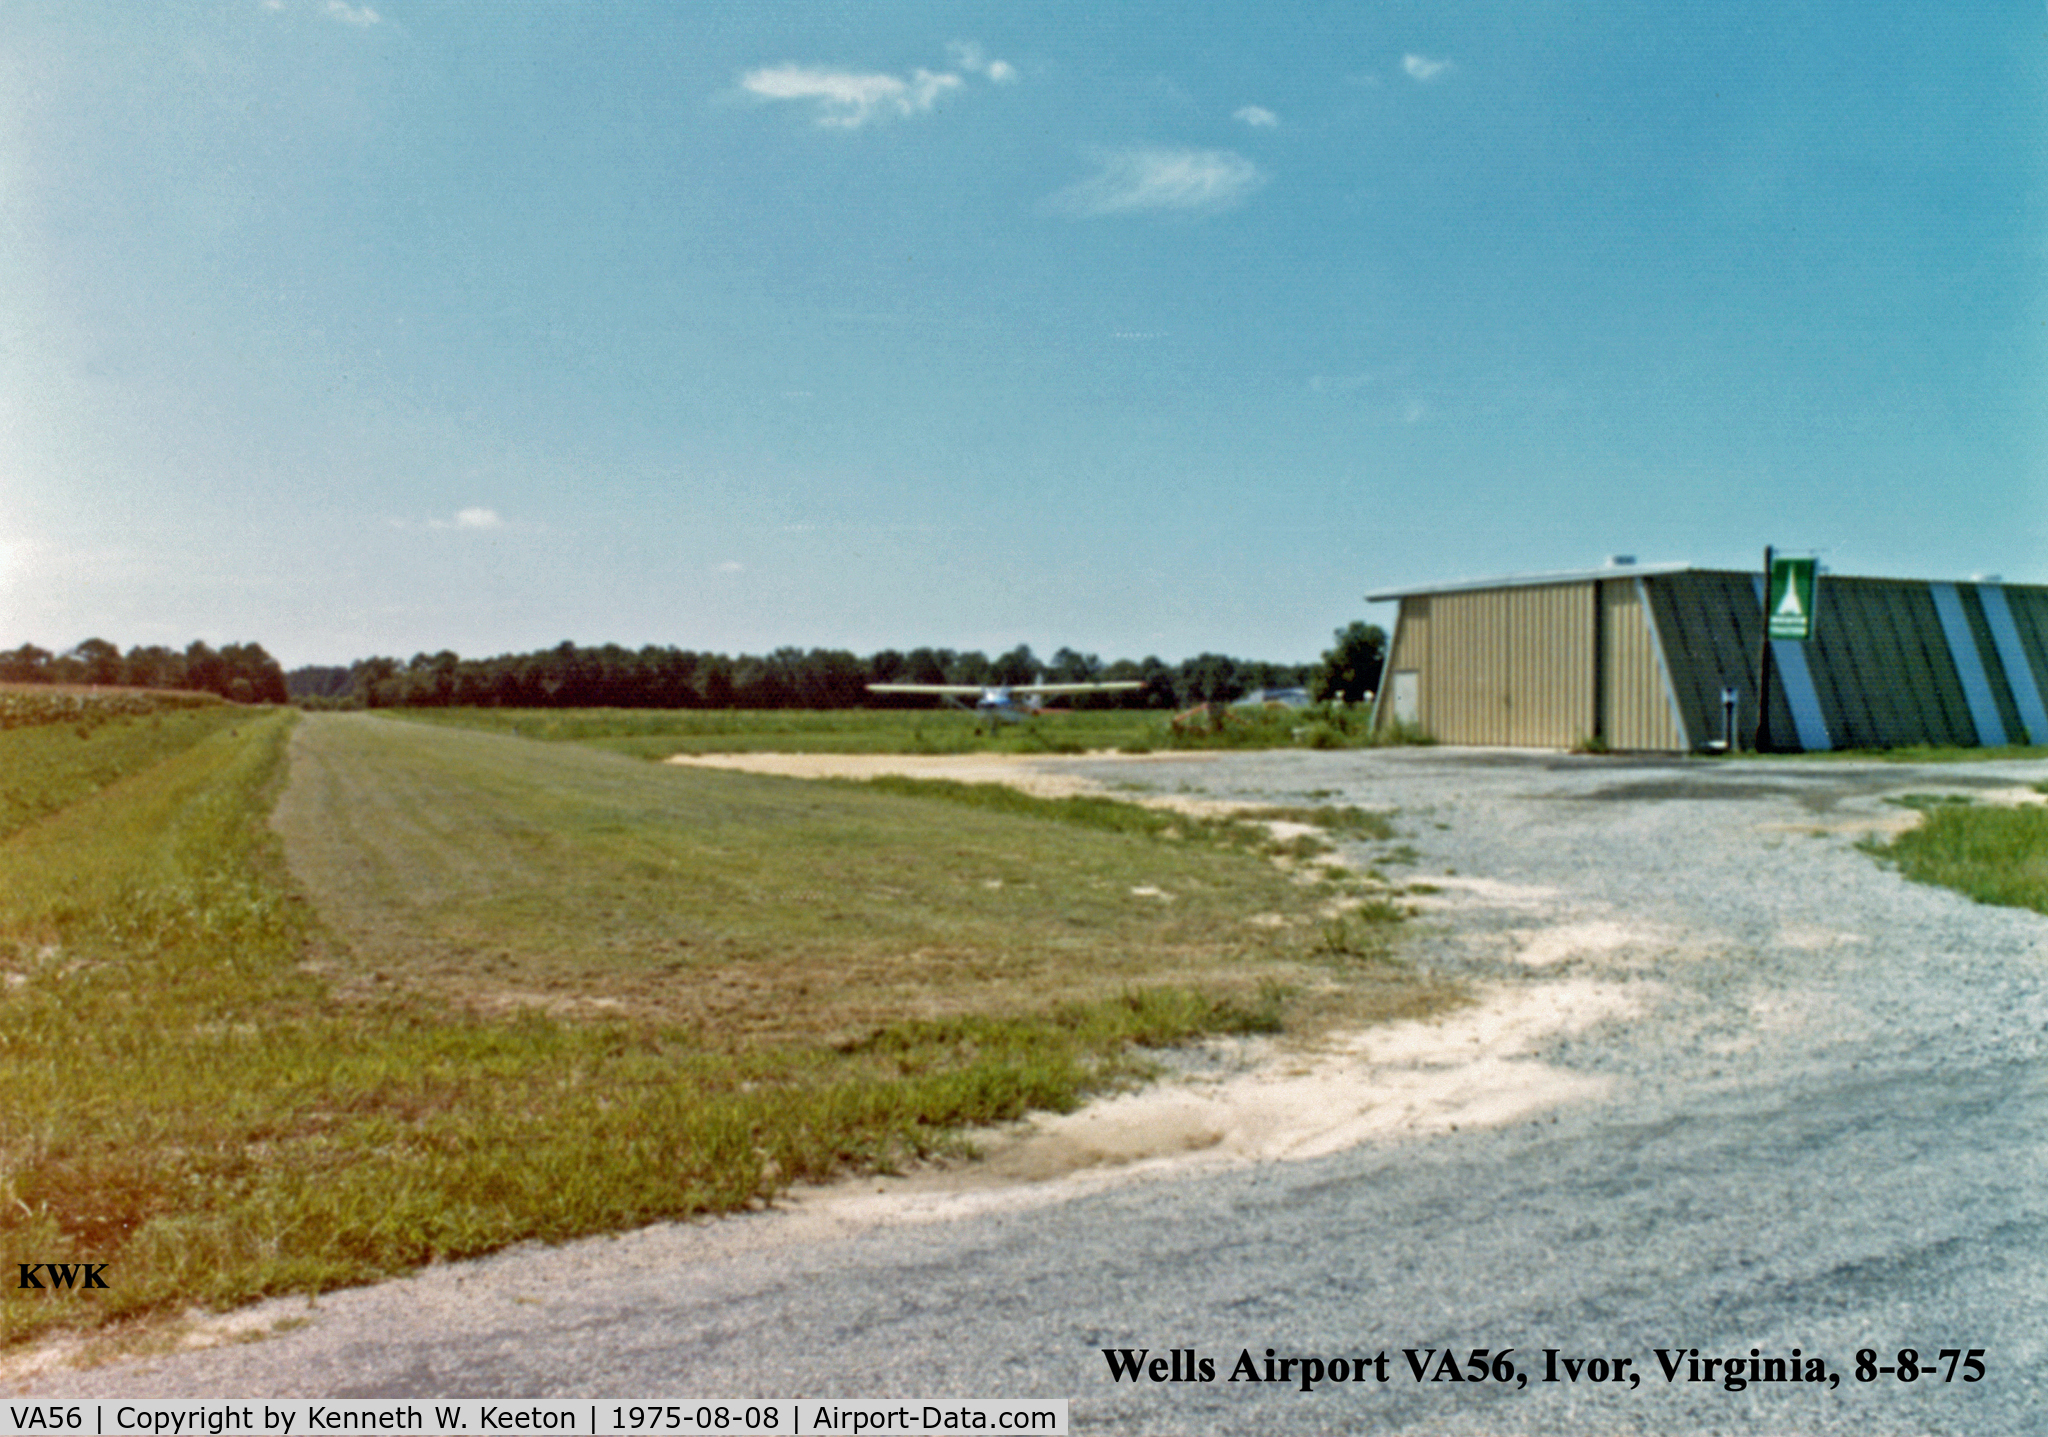 Wells Airport (VA56) - Wells Airport, VA56 Ivor, Virginia Photo by Kenneth W. Keeton 8-8-75.